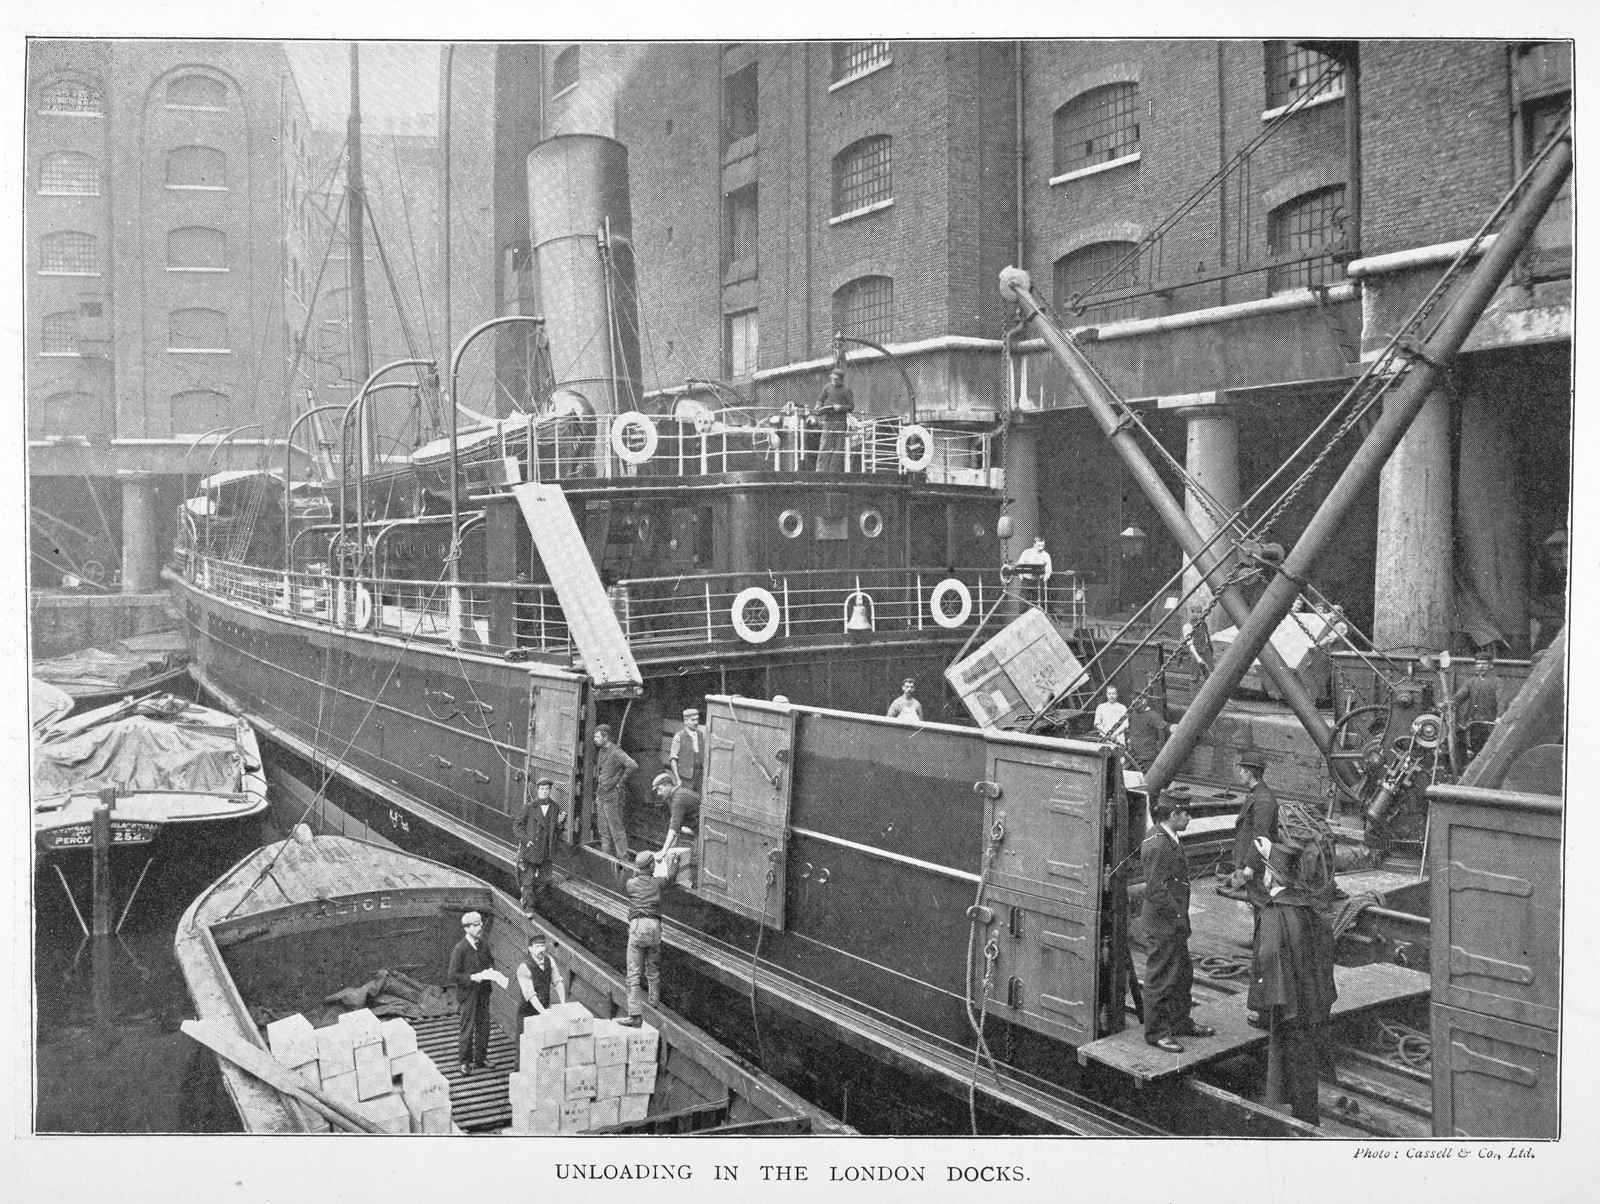 Dockers unloading goods in the London Docks in an image by Cassell & Co Ltd, 1890-1910 (ID no.: 005091)